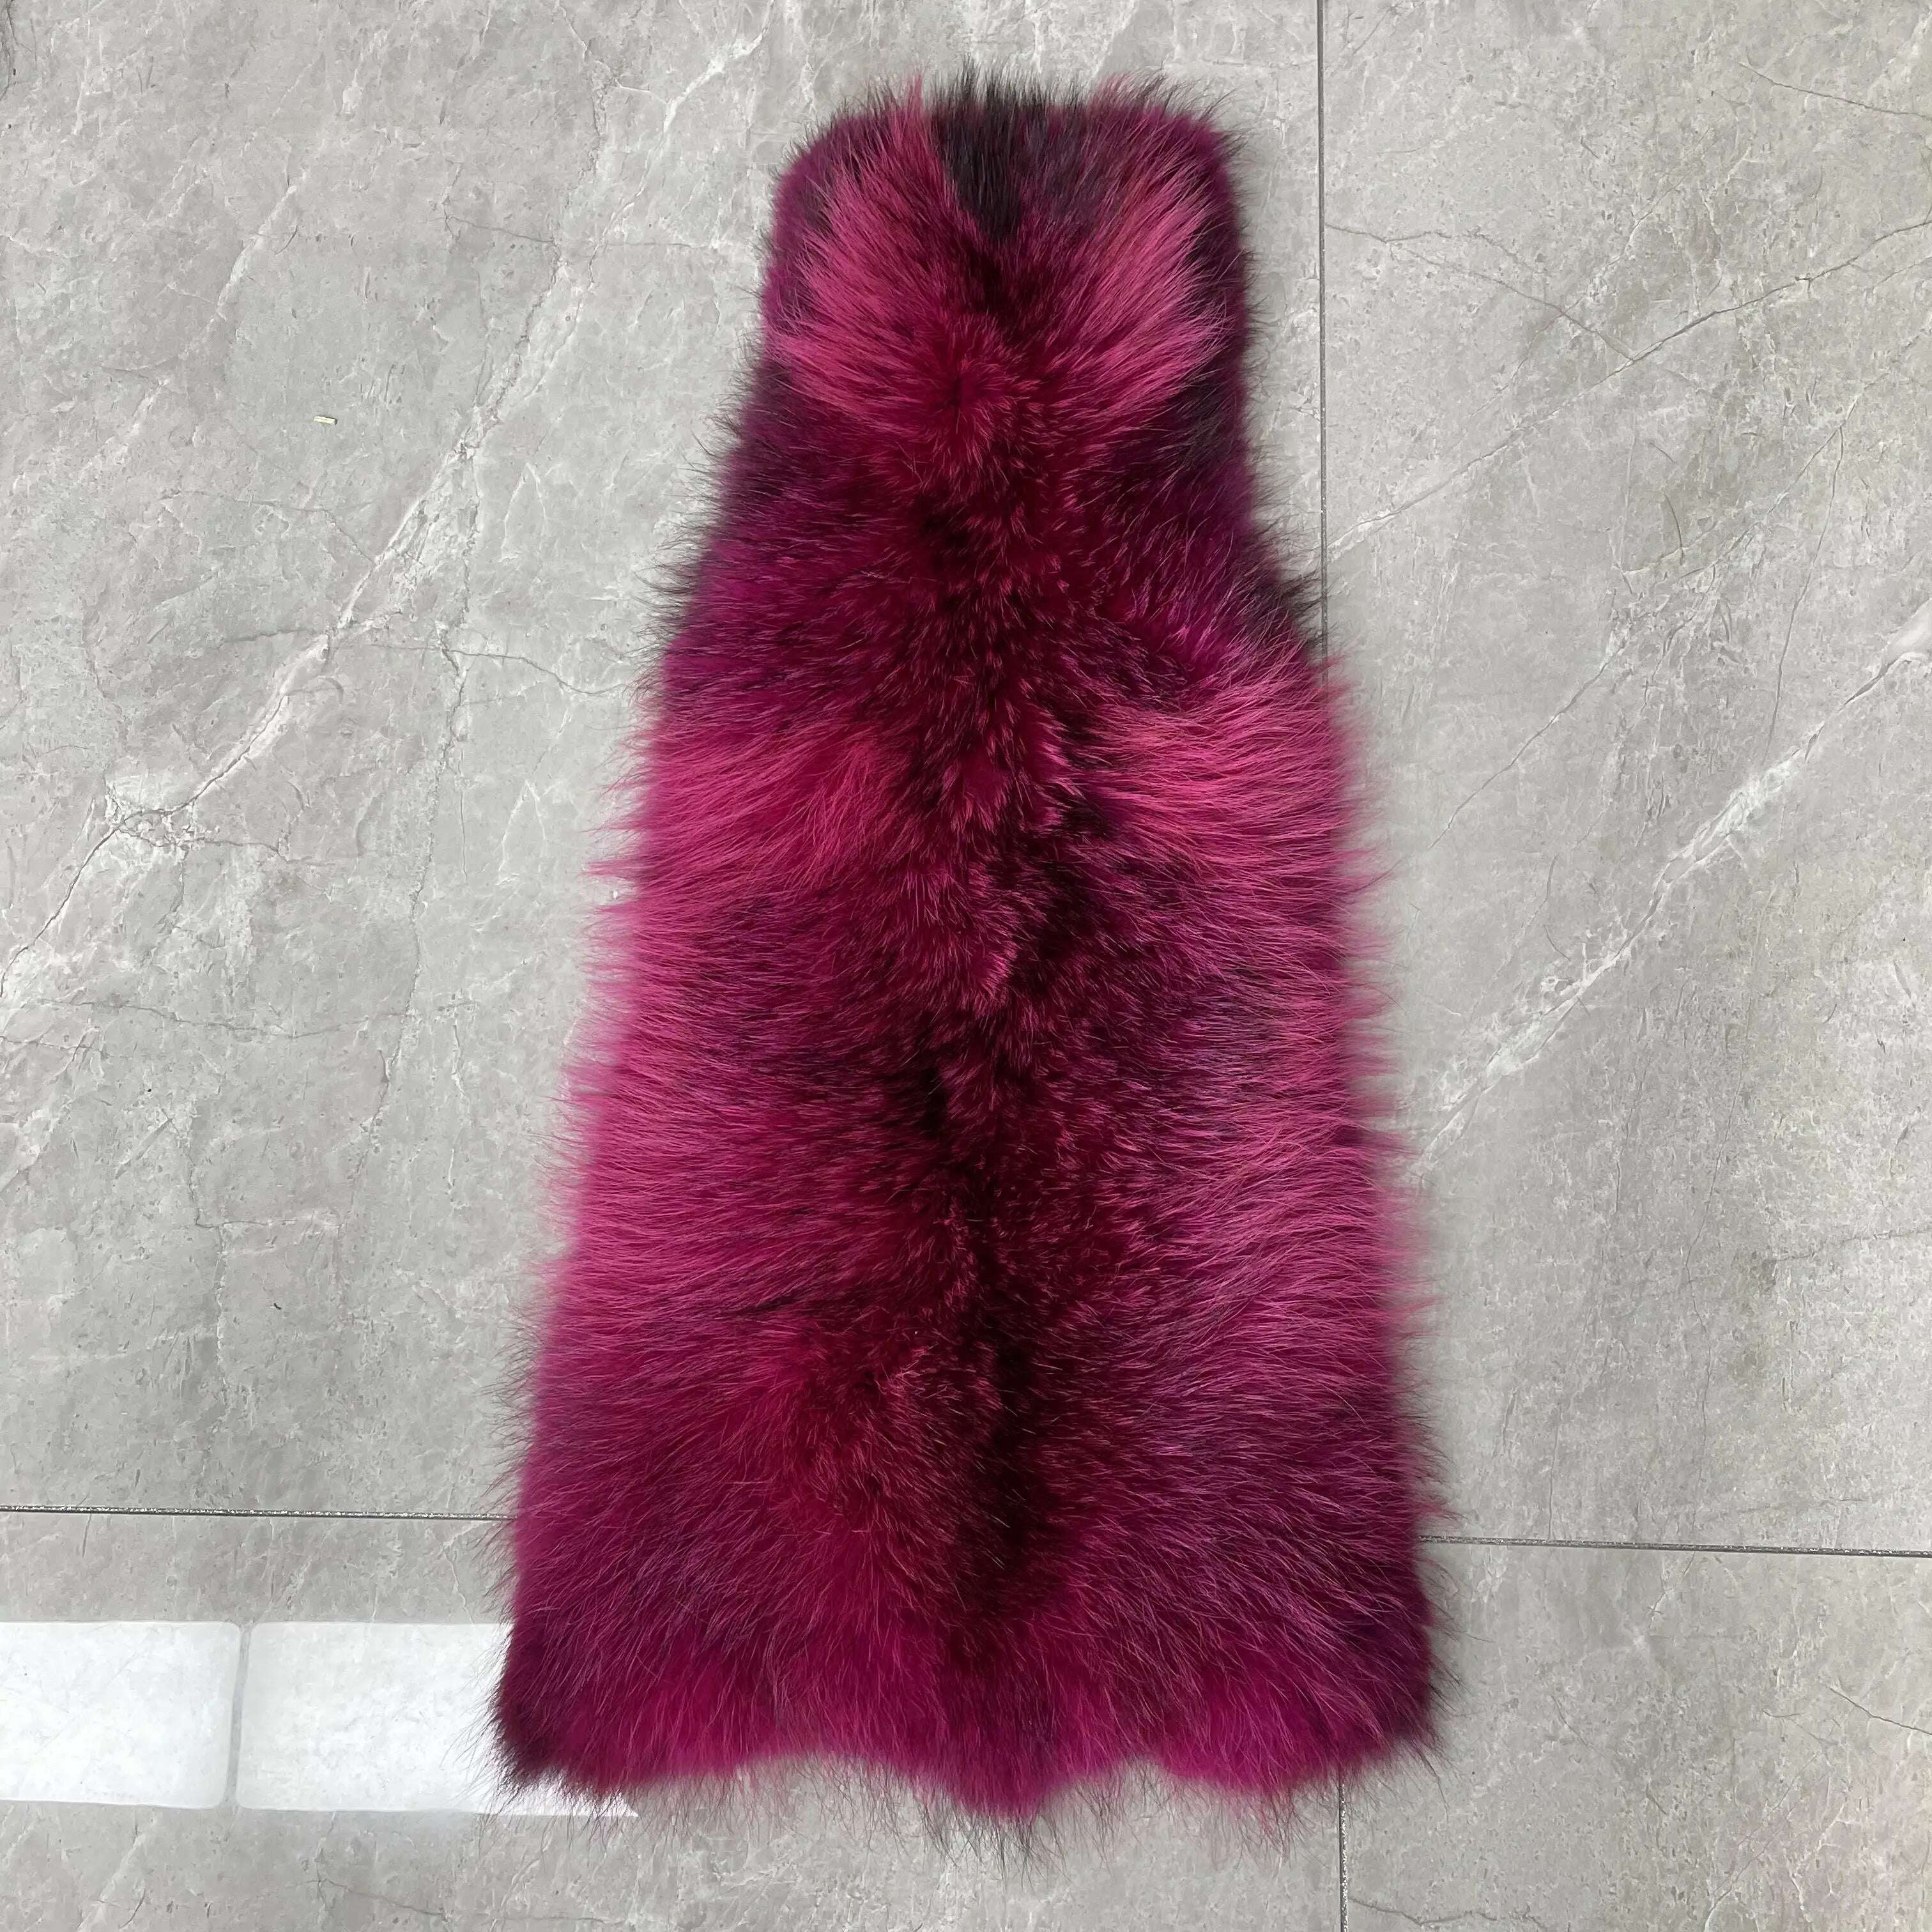 KIMLUD, Real Raccoon Fur Jacket Men Fashion Coat Winter Warm Long Style, Hot Pink / XS(88cm), KIMLUD Women's Clothes